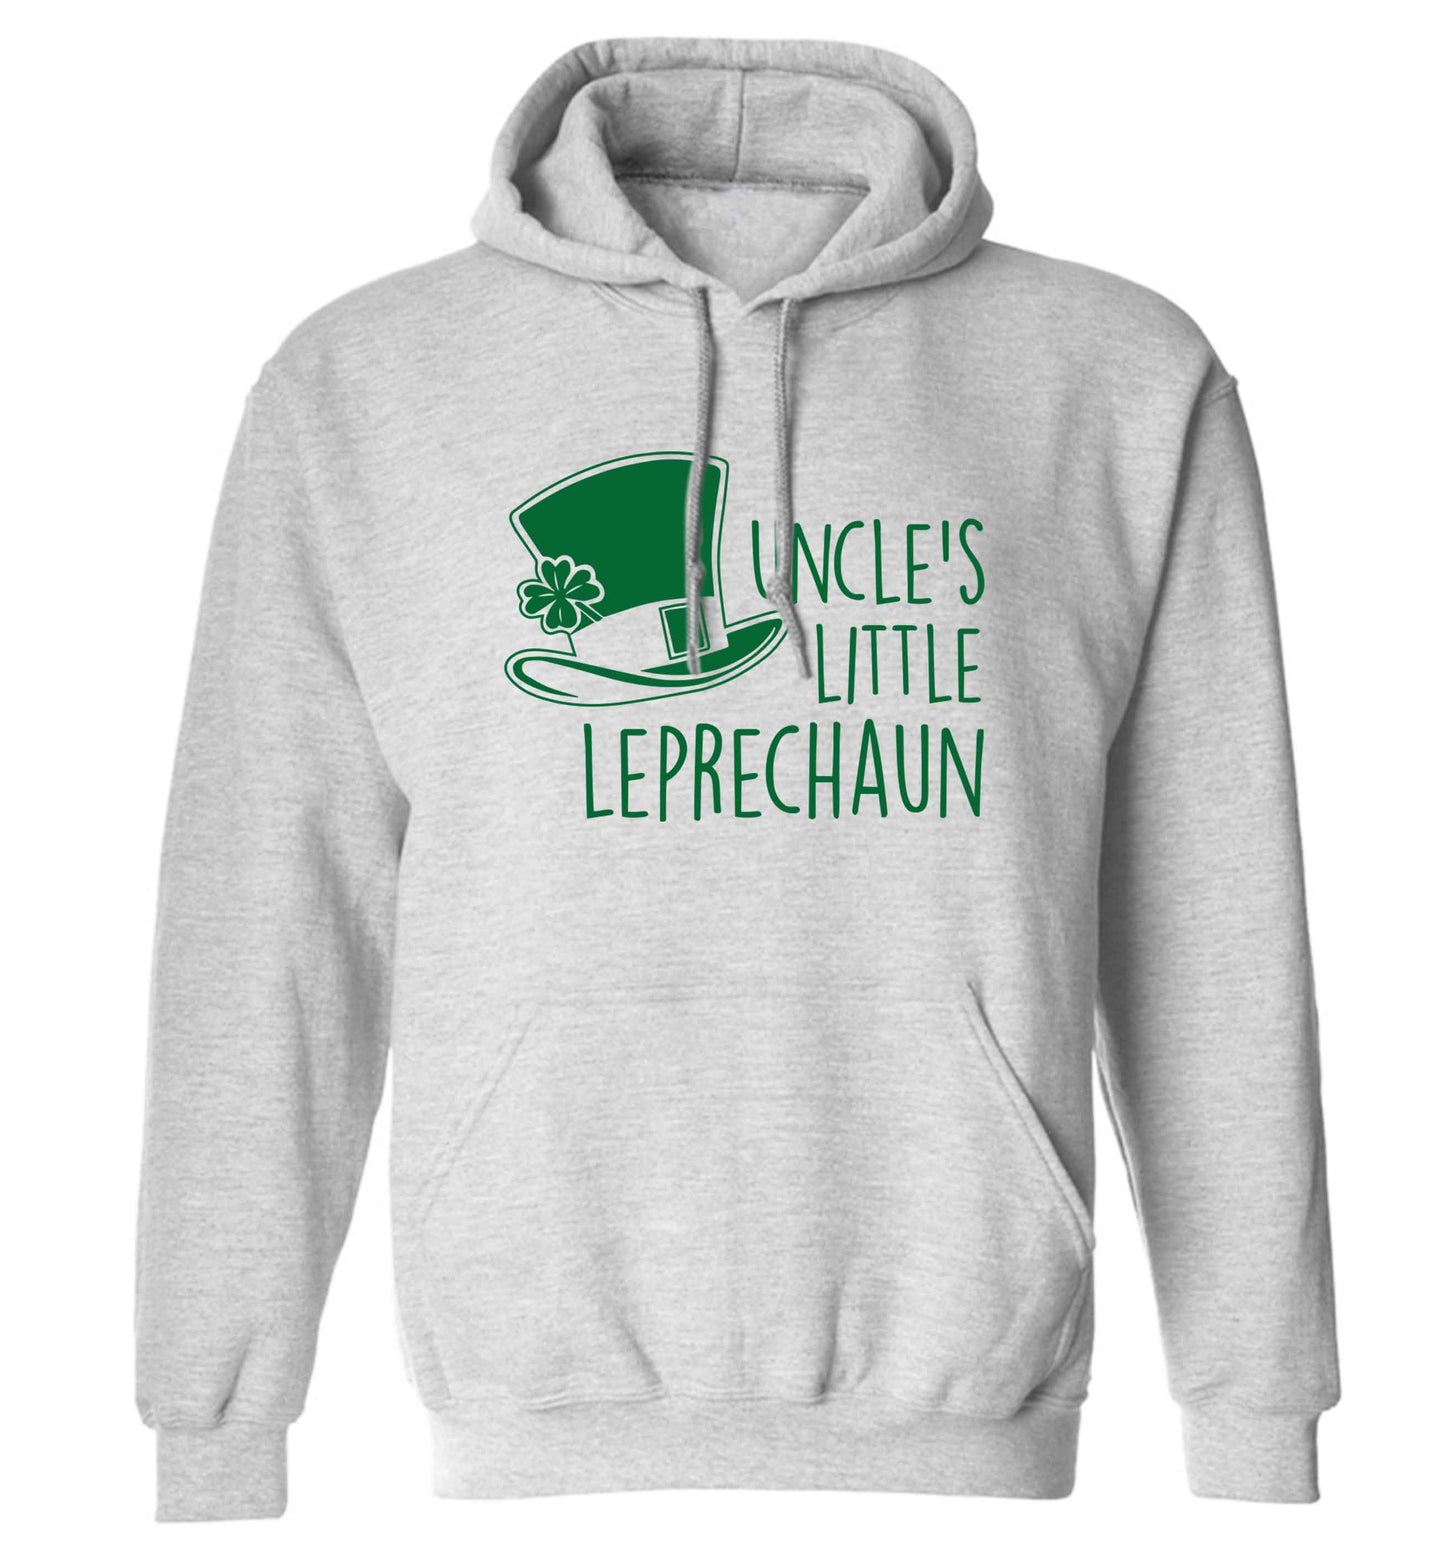 Uncles little leprechaun adults unisex grey hoodie 2XL